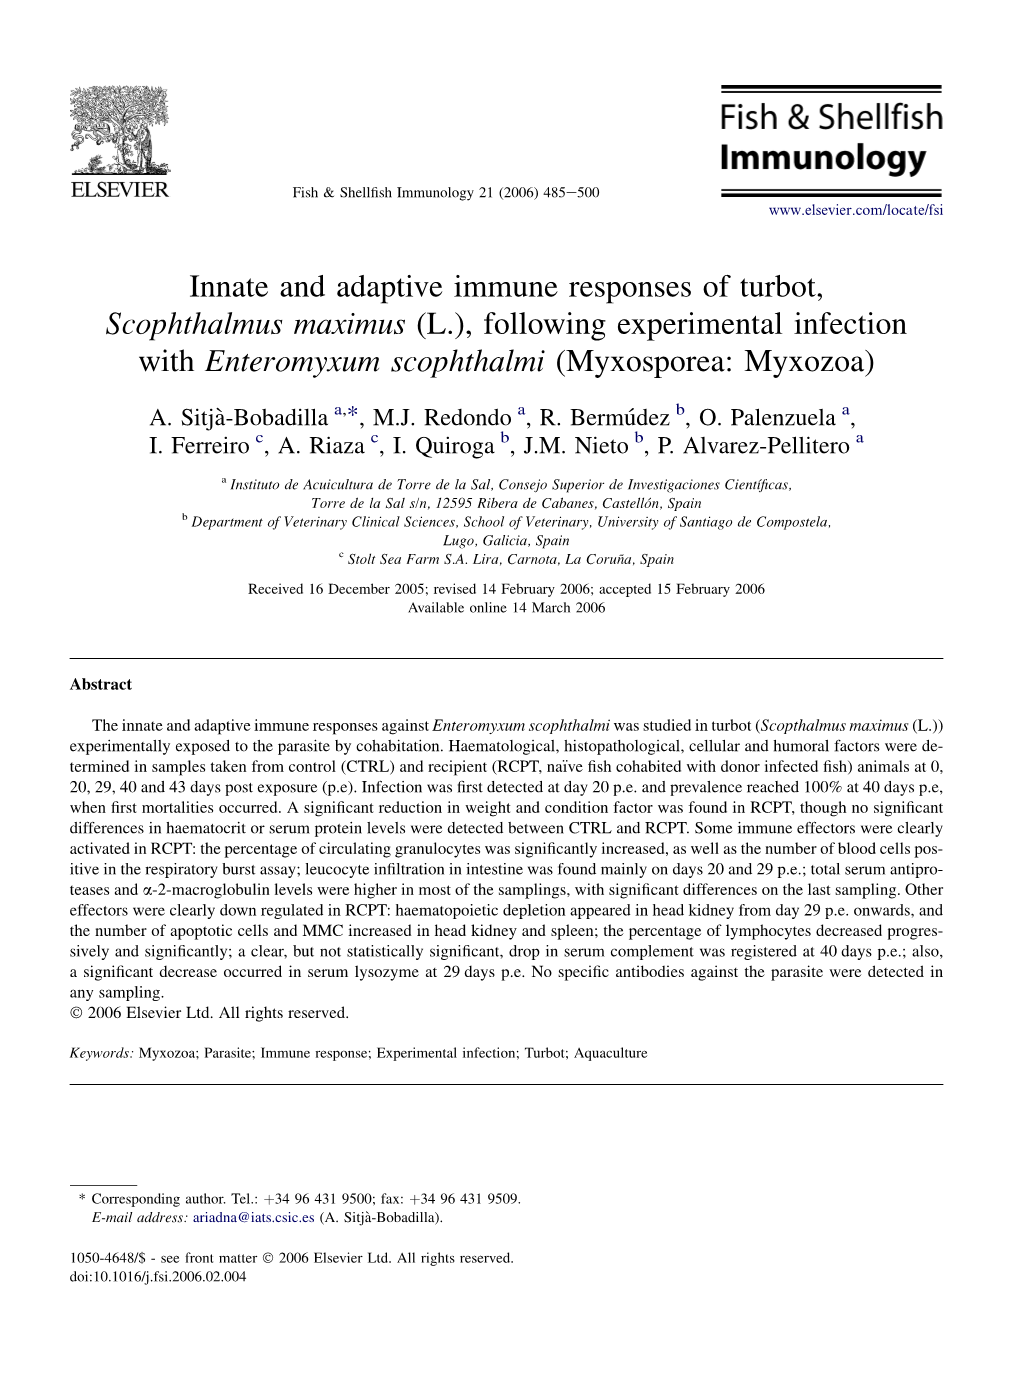 Innate and Adaptive Immune Responses of Turbot, Scophthalmus Maximus (L.), Following Experimental Infection with Enteromyxum Scophthalmi (Myxosporea: Myxozoa)